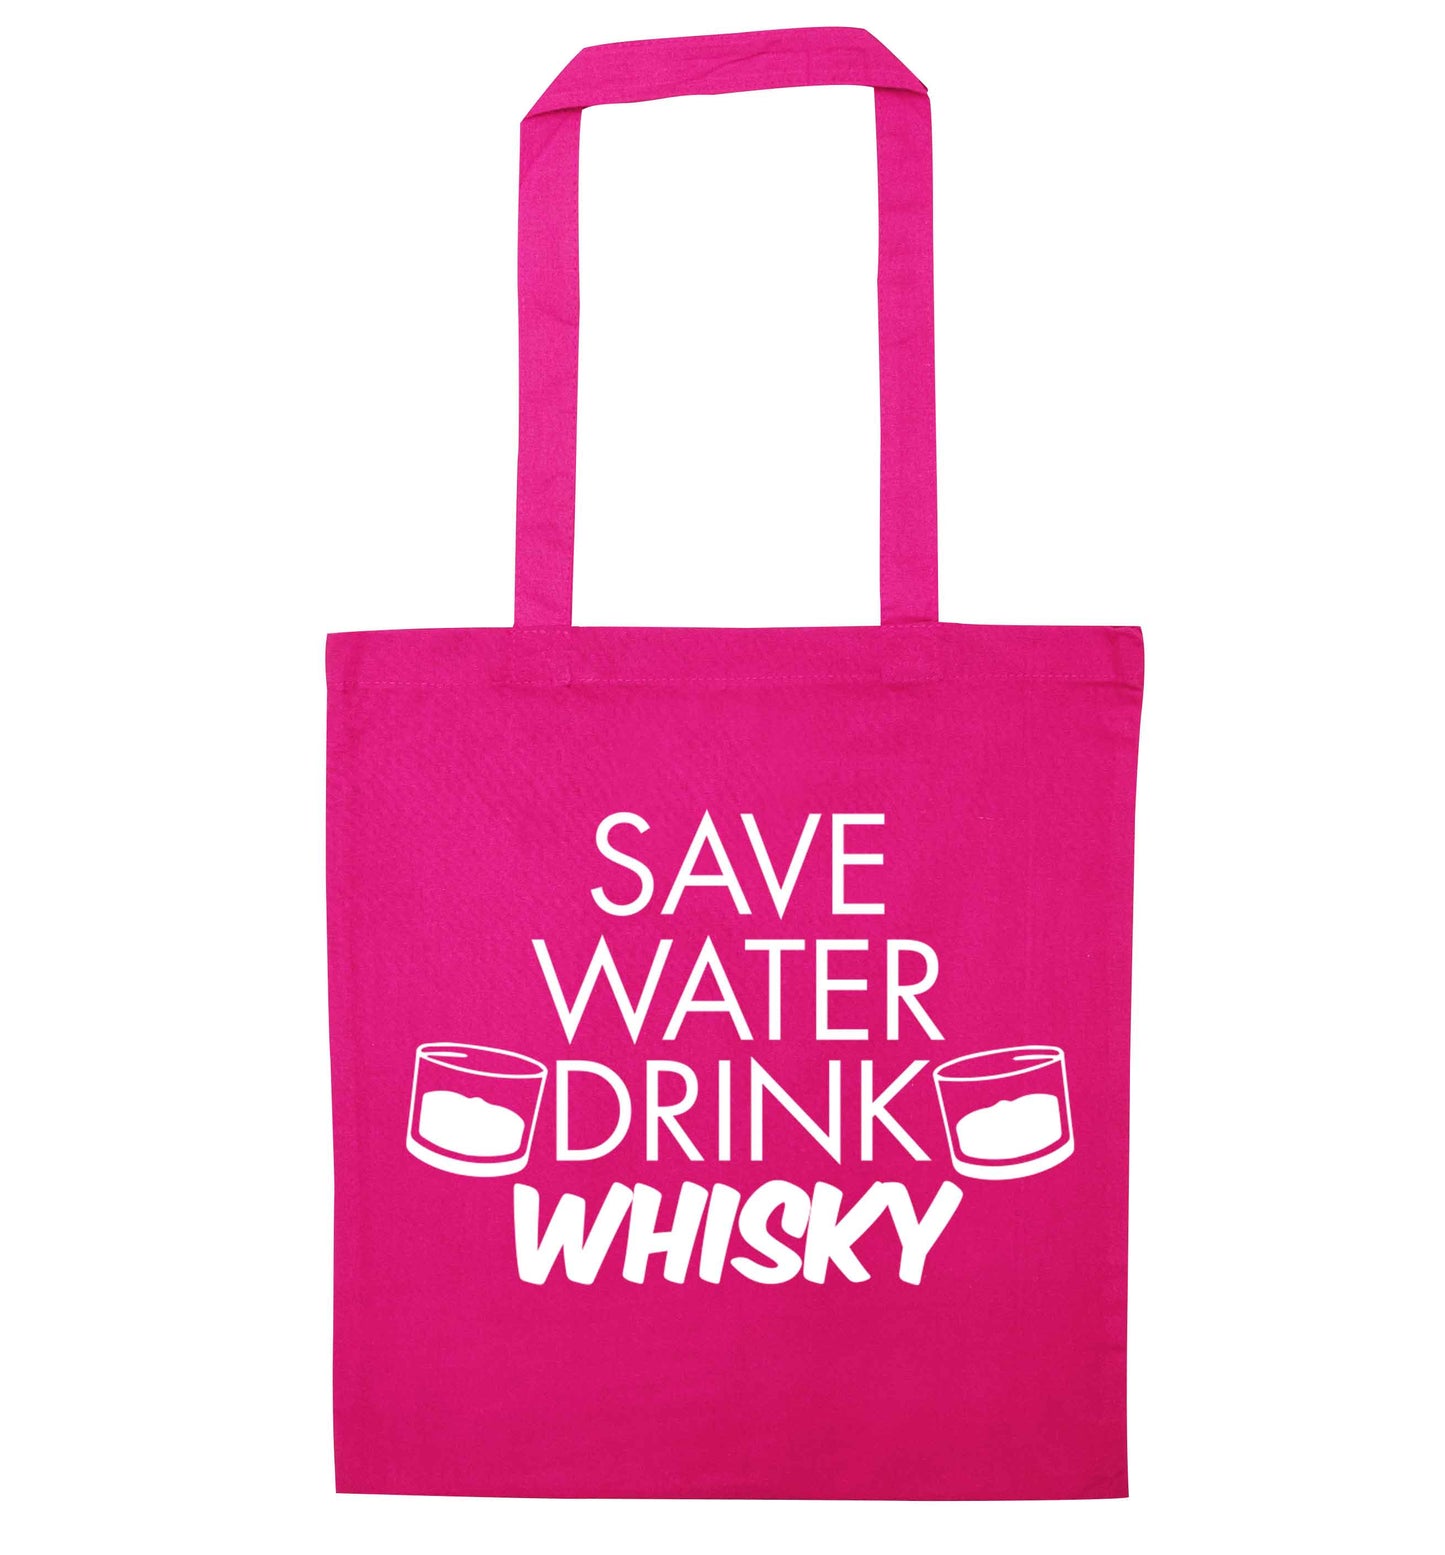 Save water drink whisky pink tote bag